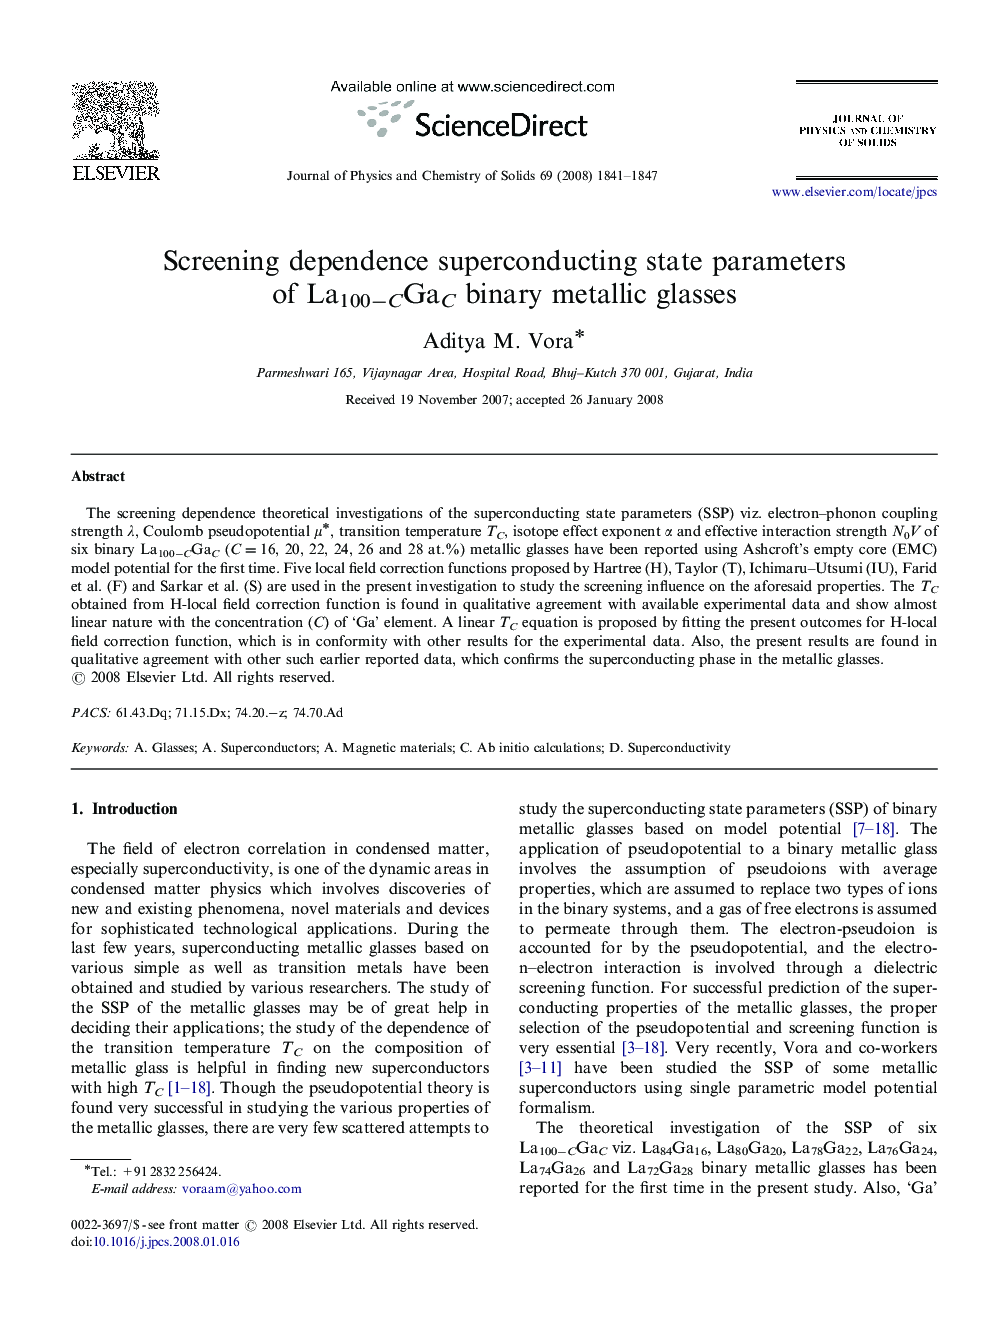 Screening dependence superconducting state parameters of La100âCGaC binary metallic glasses